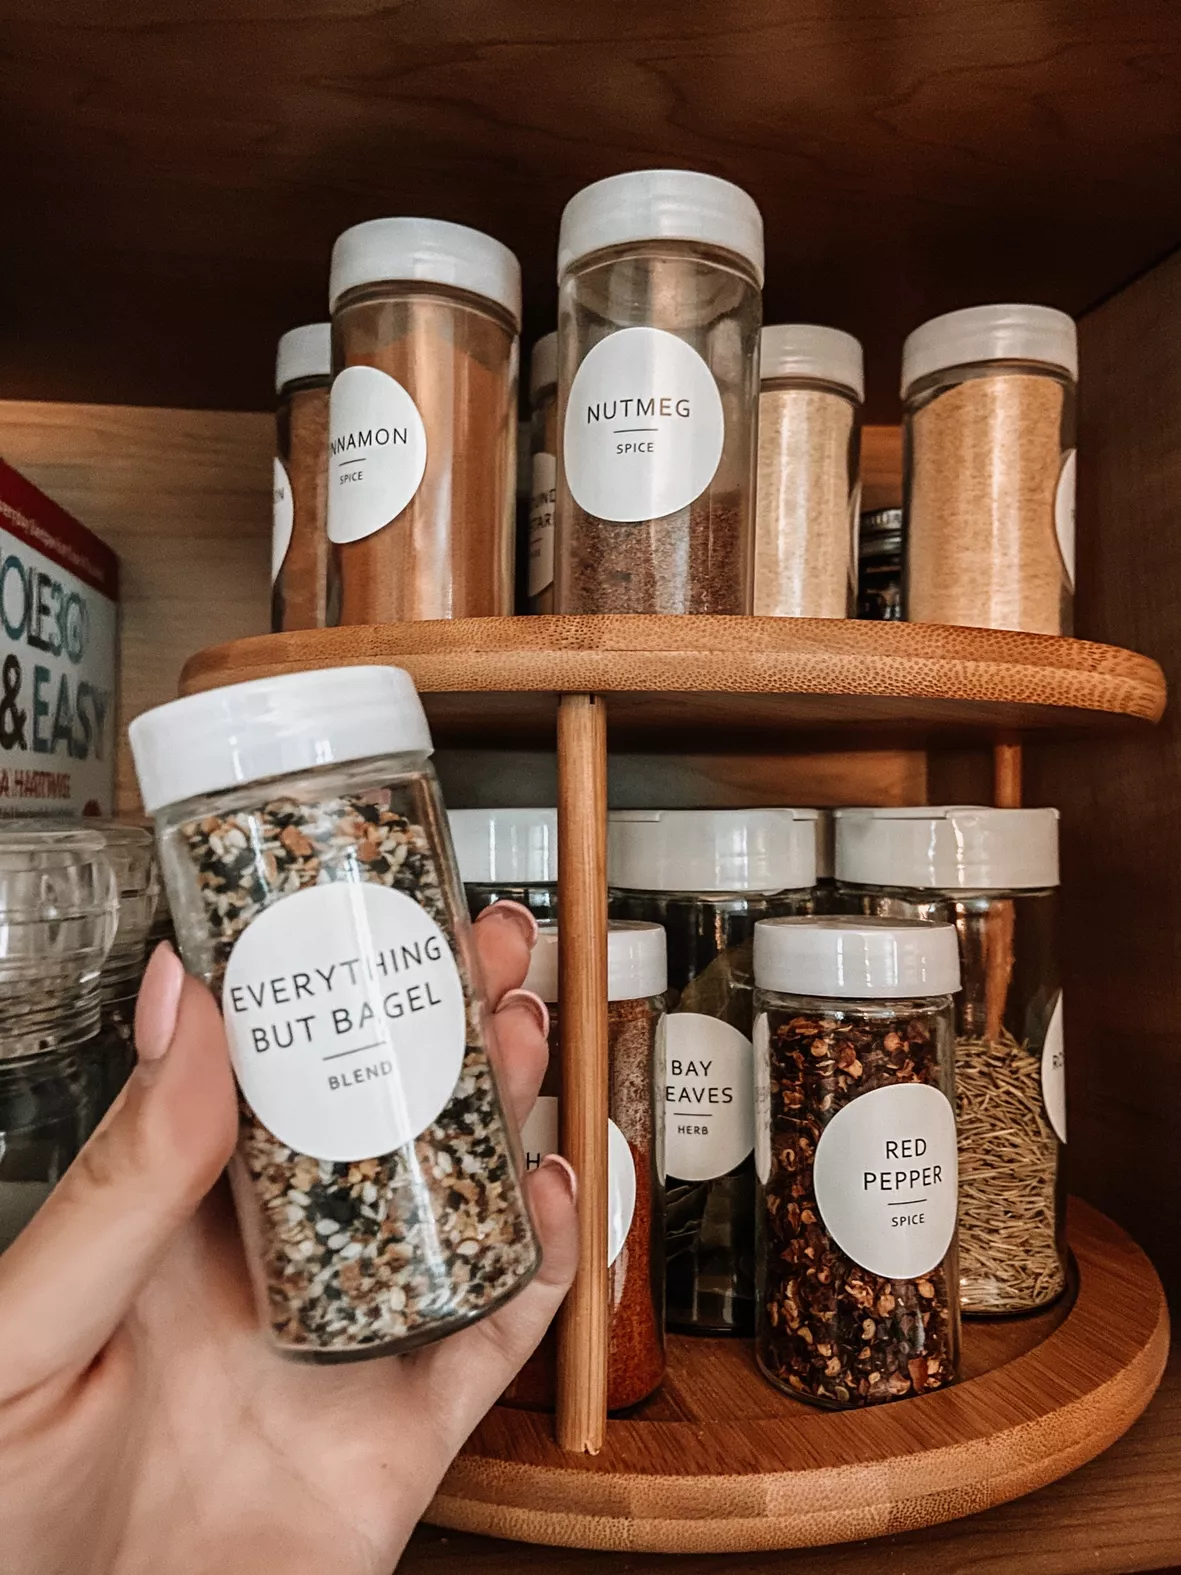 160 Minimalist Spice Jar Labels for Spice Cabinet, Preprinted Herb